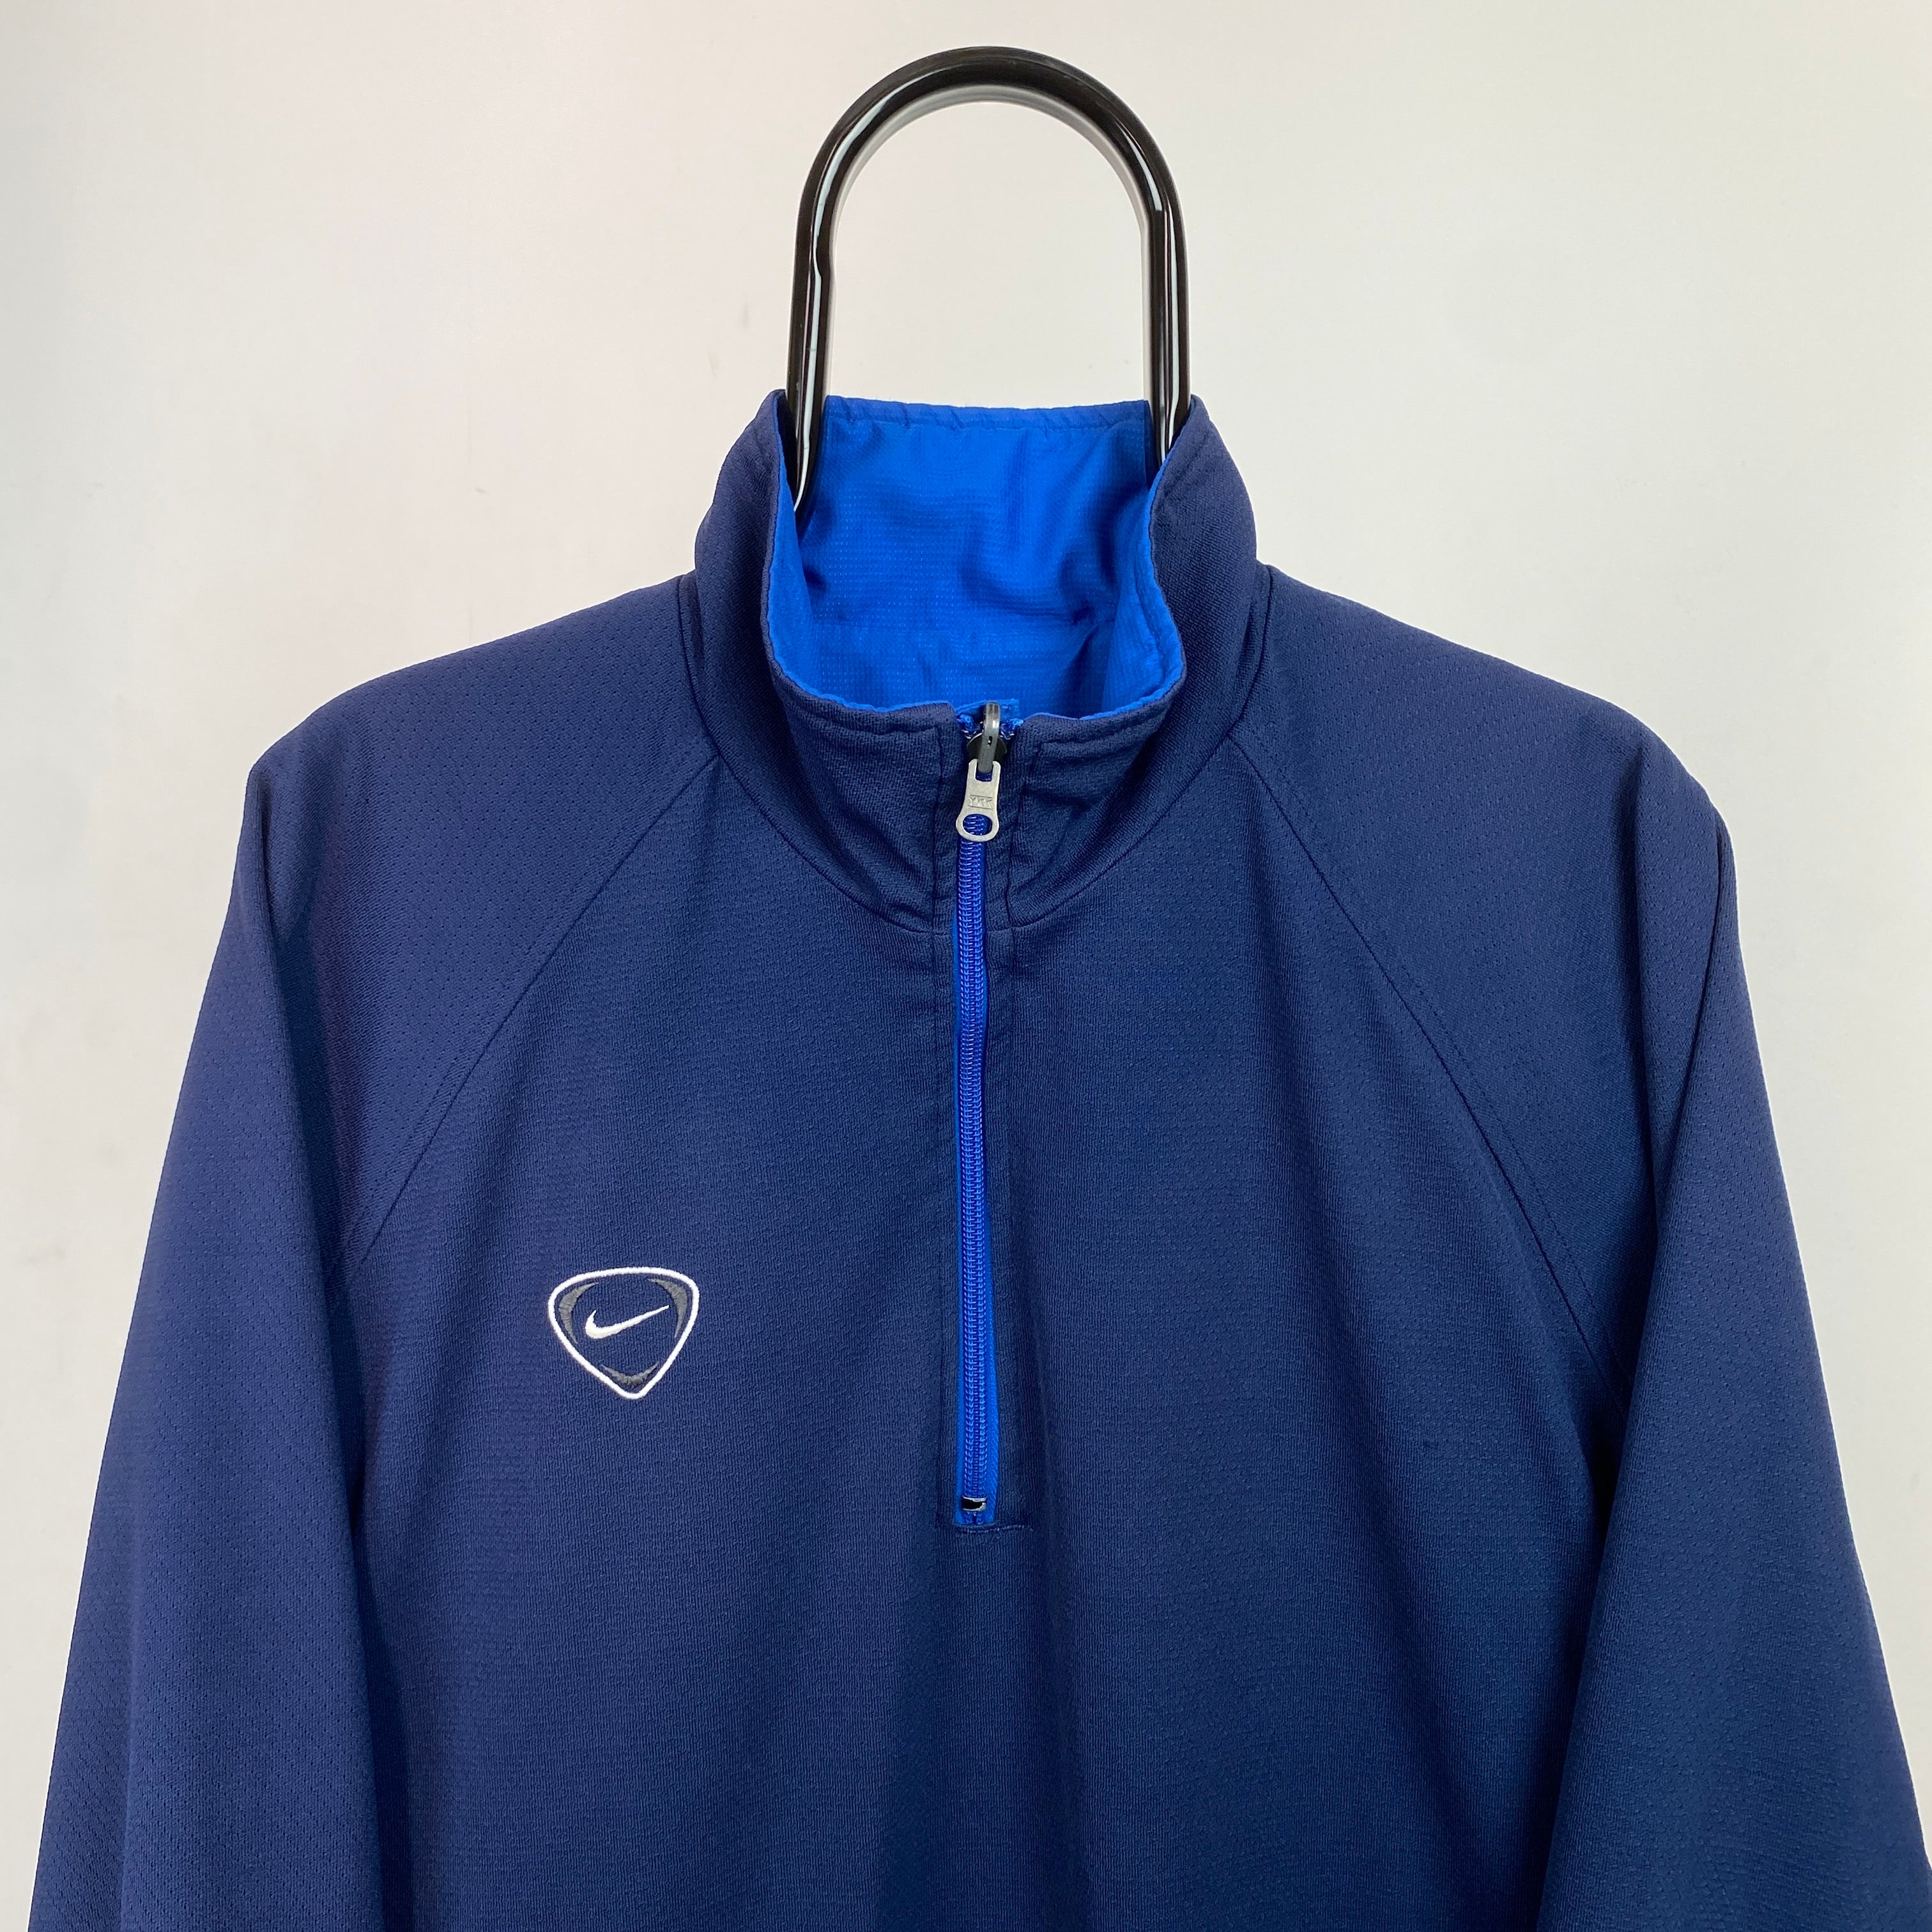 00s Nike Reversible Windbreaker Jacket Blue Medium